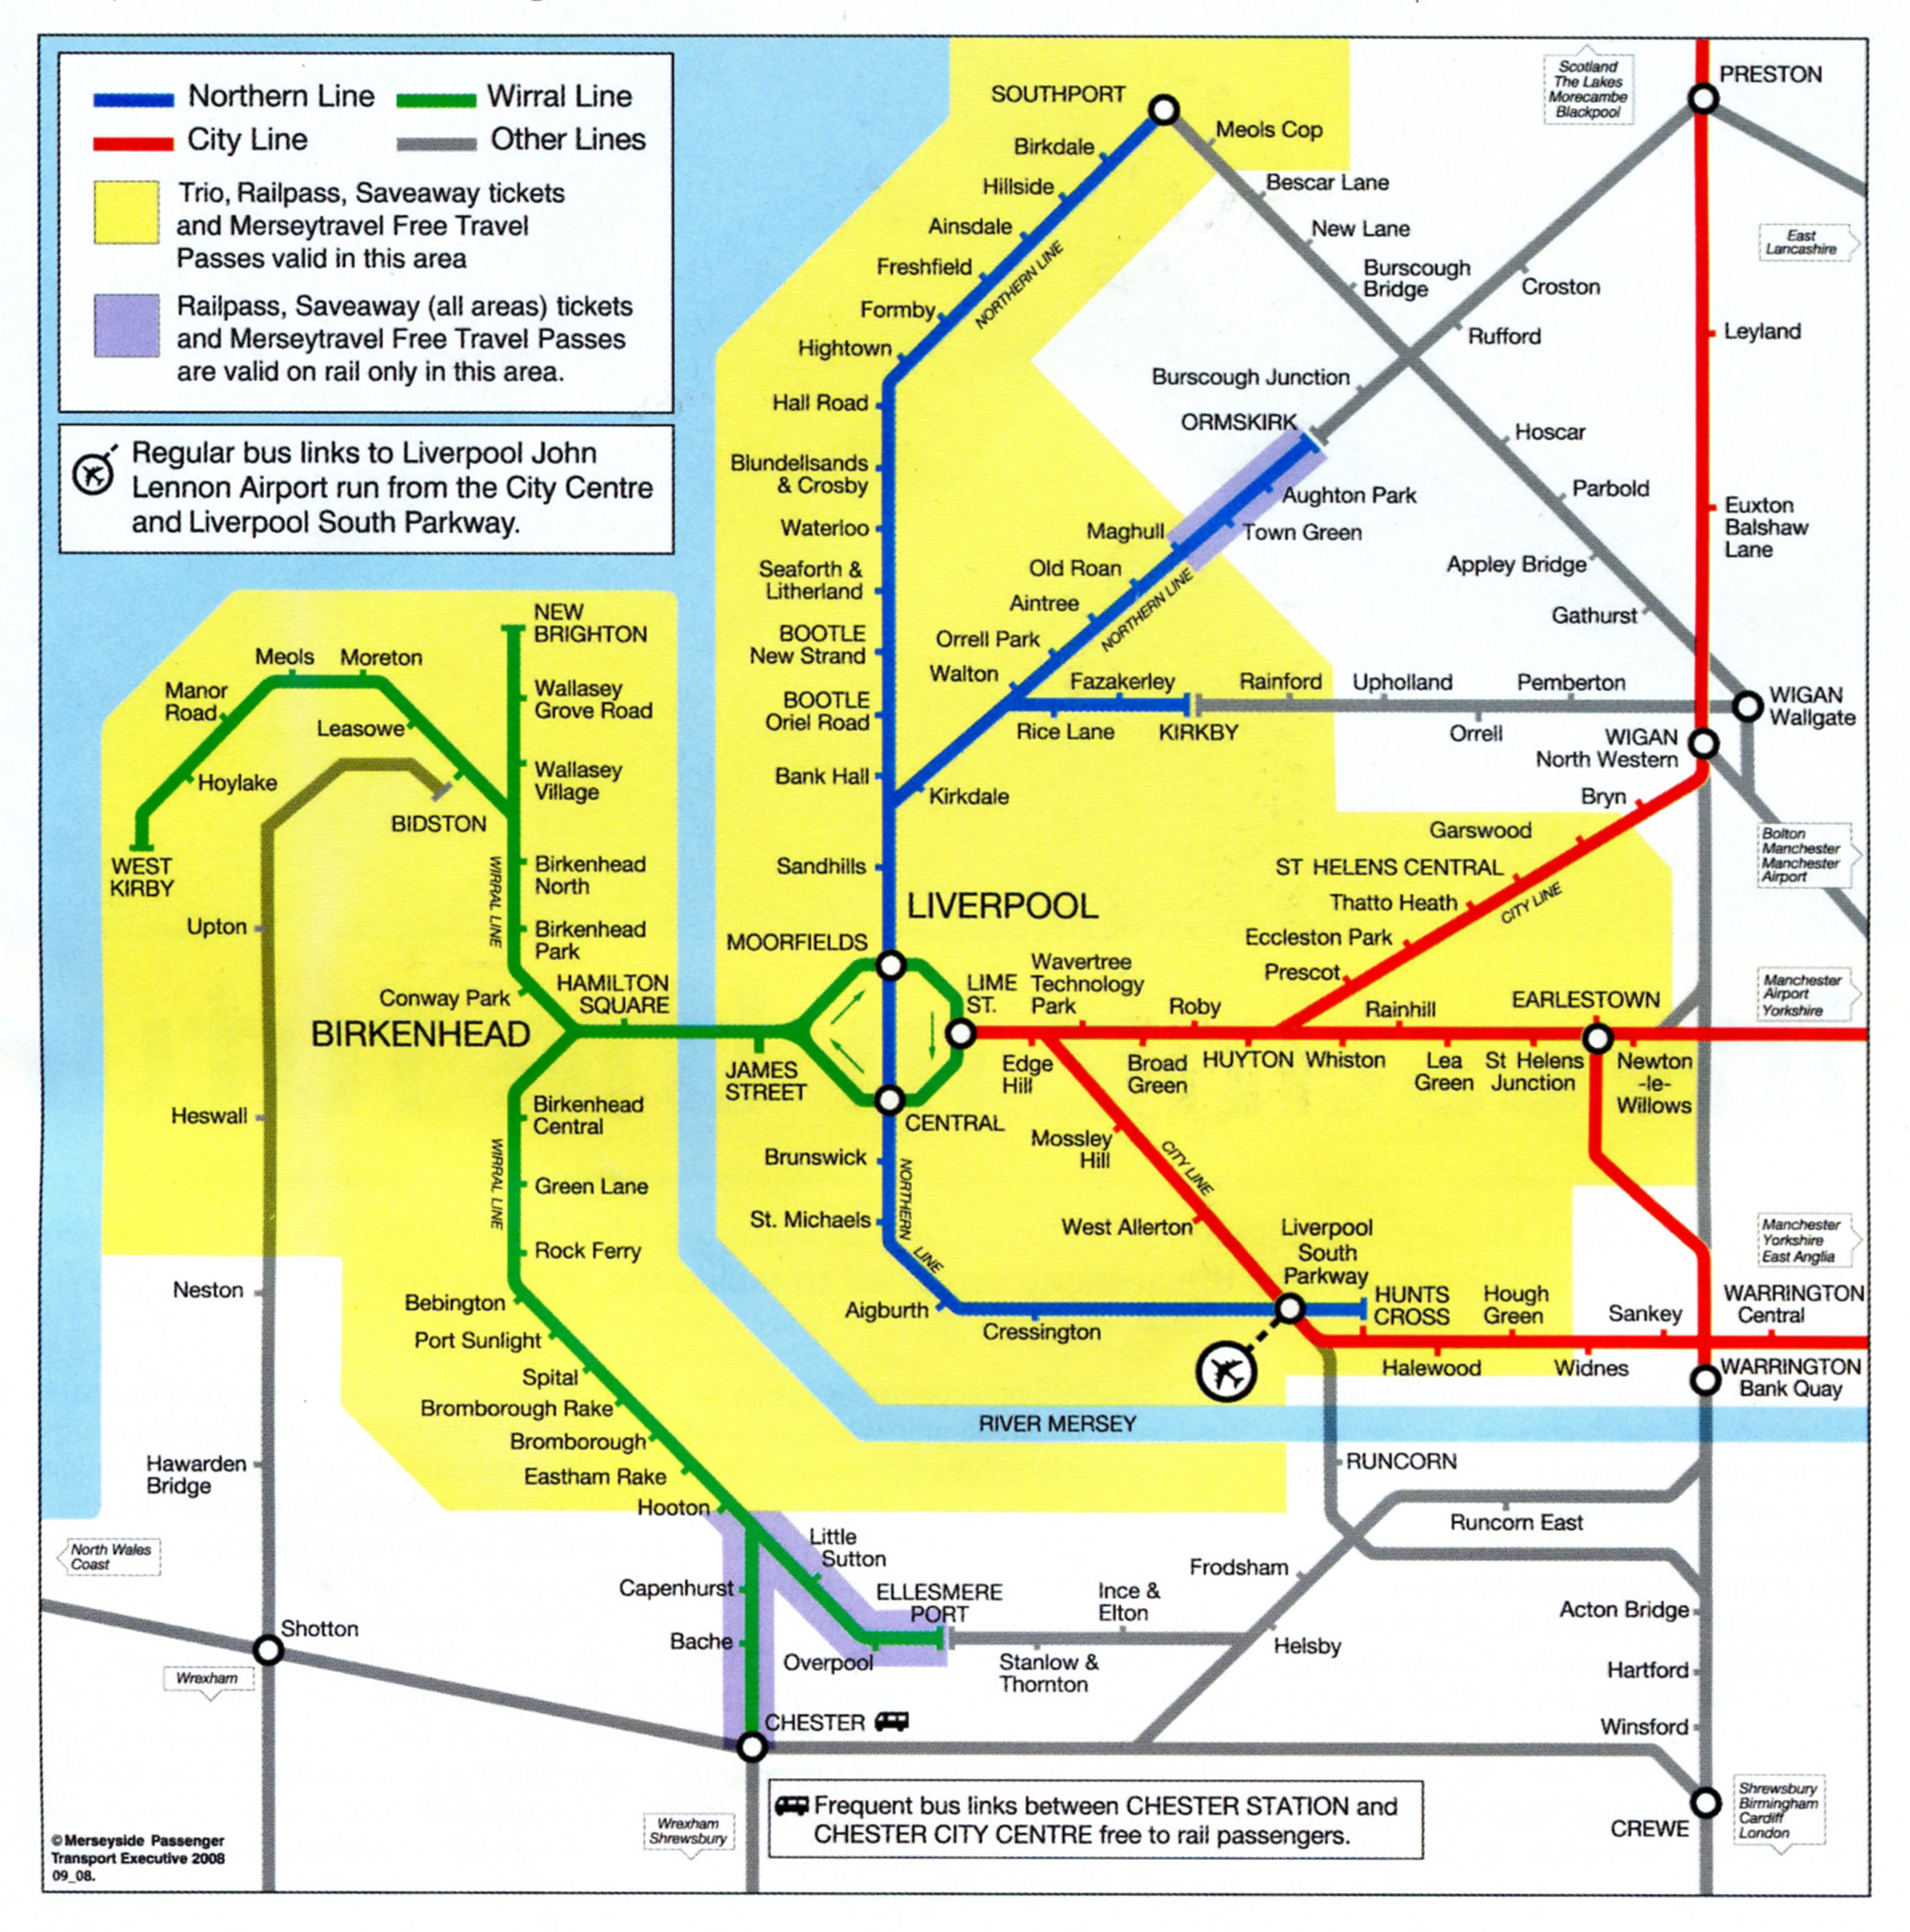 plan your journey merseyrail